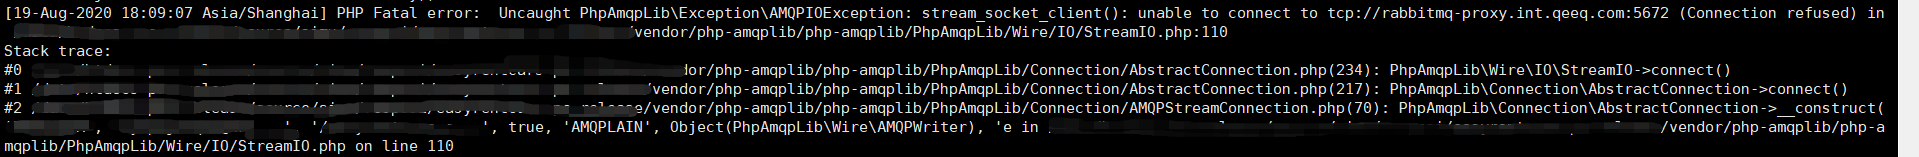 php_error.log rabbitmq connect error